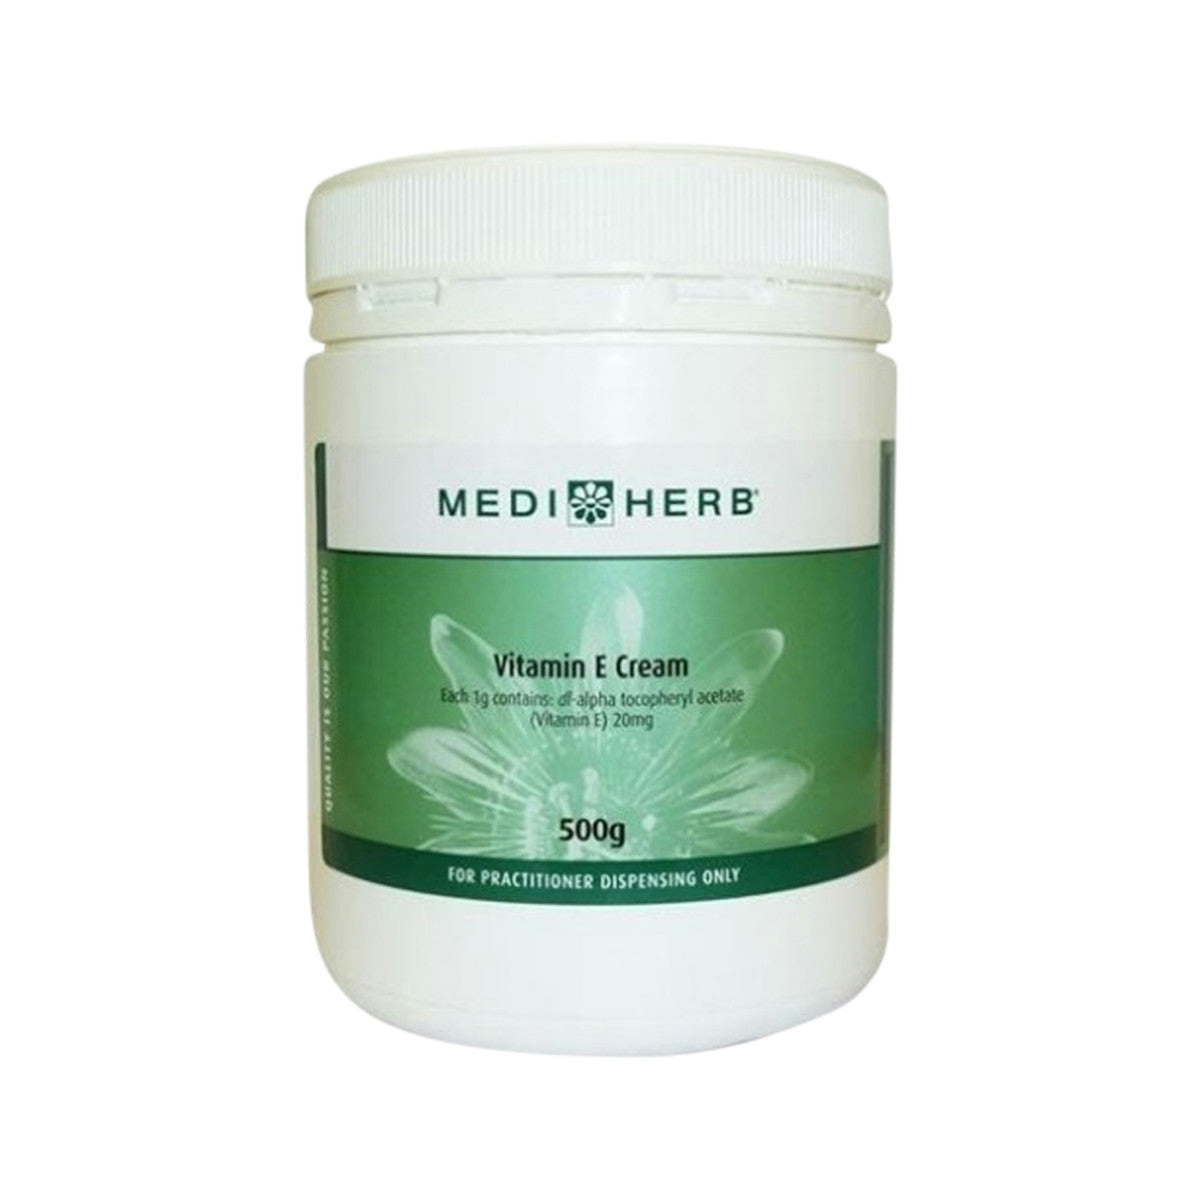 MediHerb Vitamin E Cream 500g